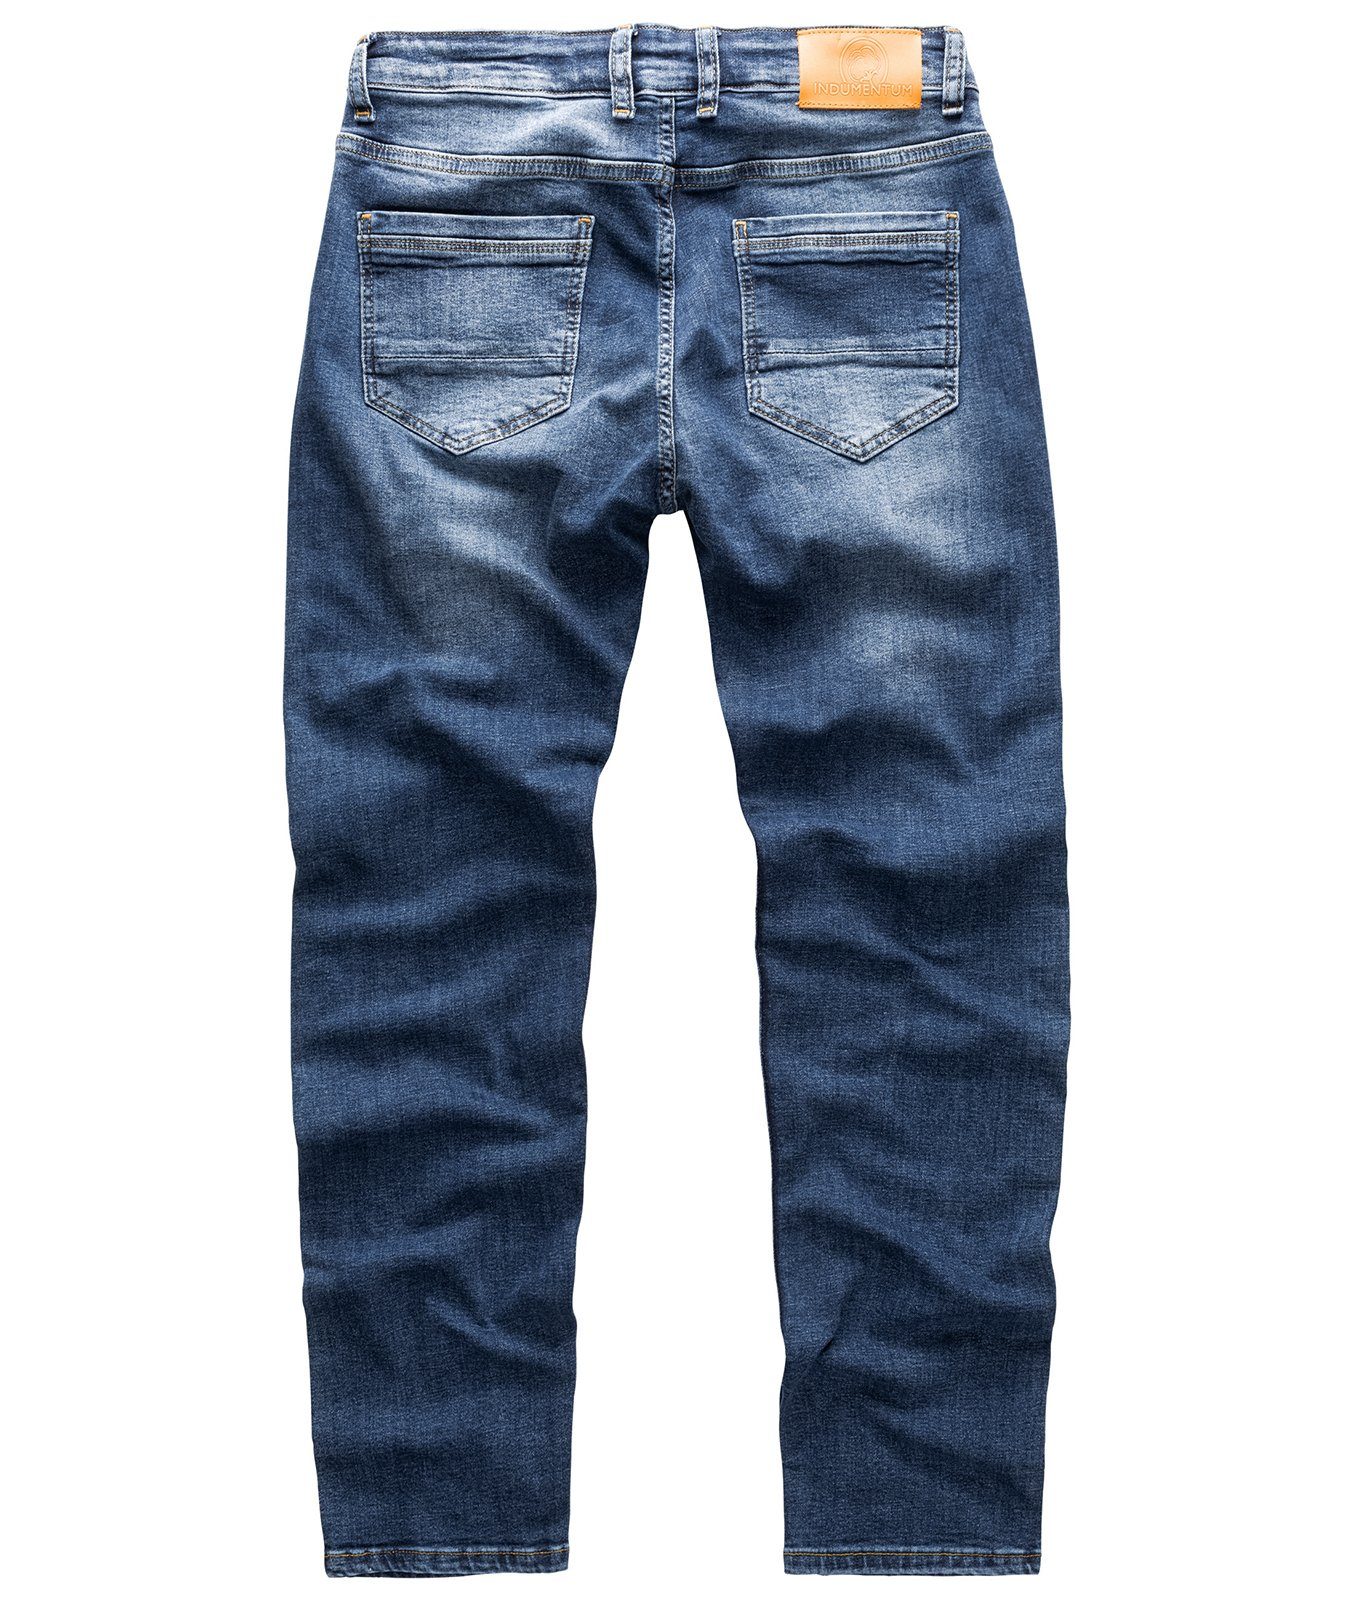 IS-300 Indumentum Slim-fit-Jeans Stonewashed Herren Jeans Blau